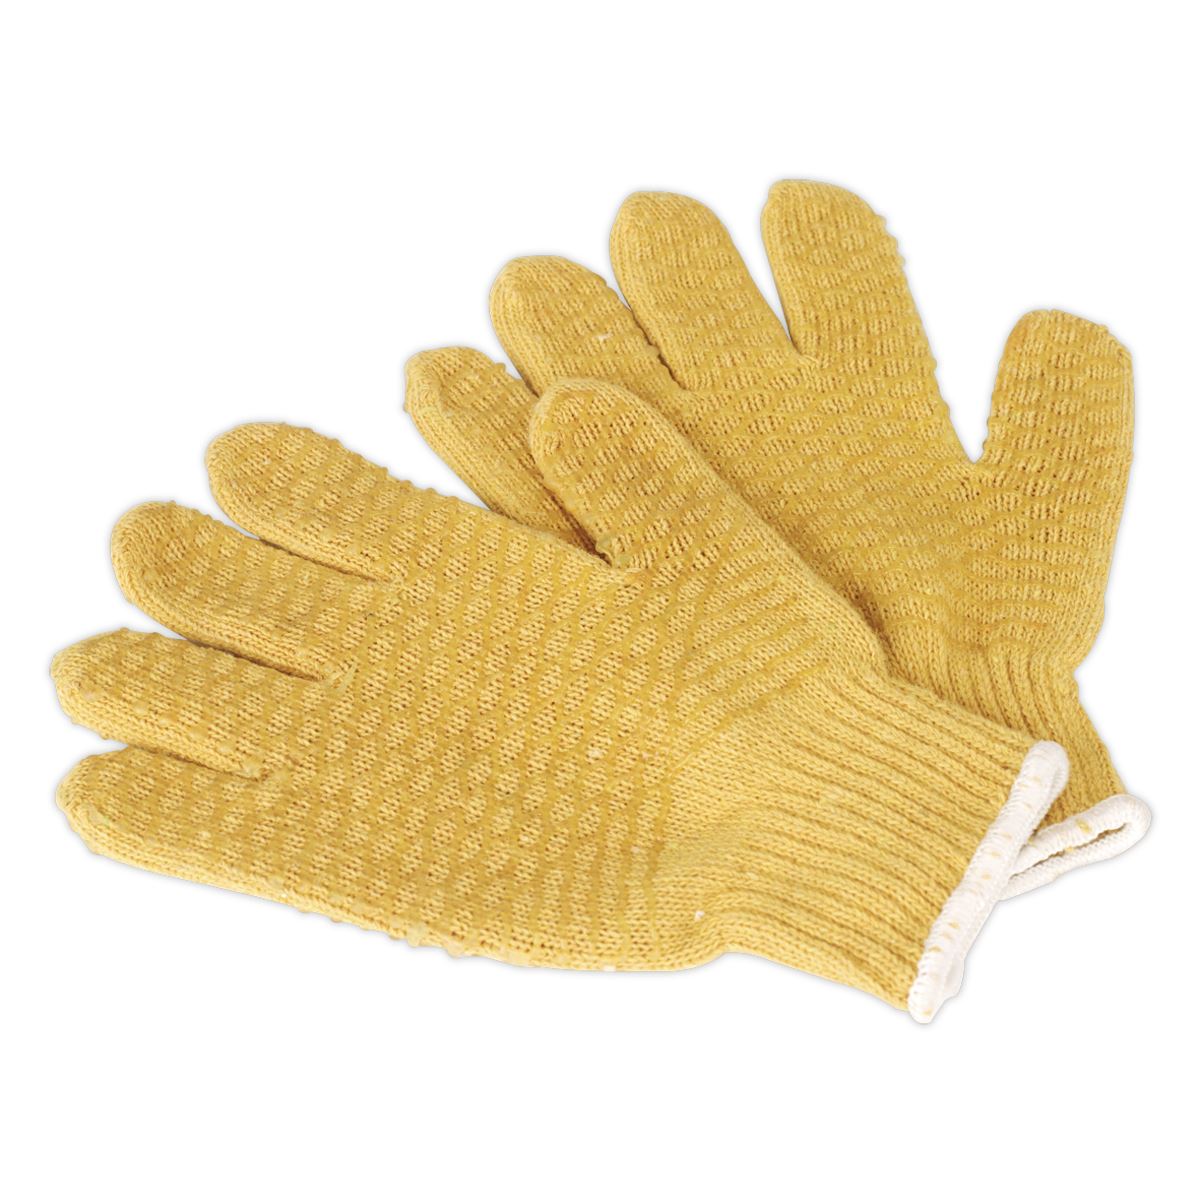 Worksafe by Sealey Anti-Slip Handling Gloves (X-Large) - Pair